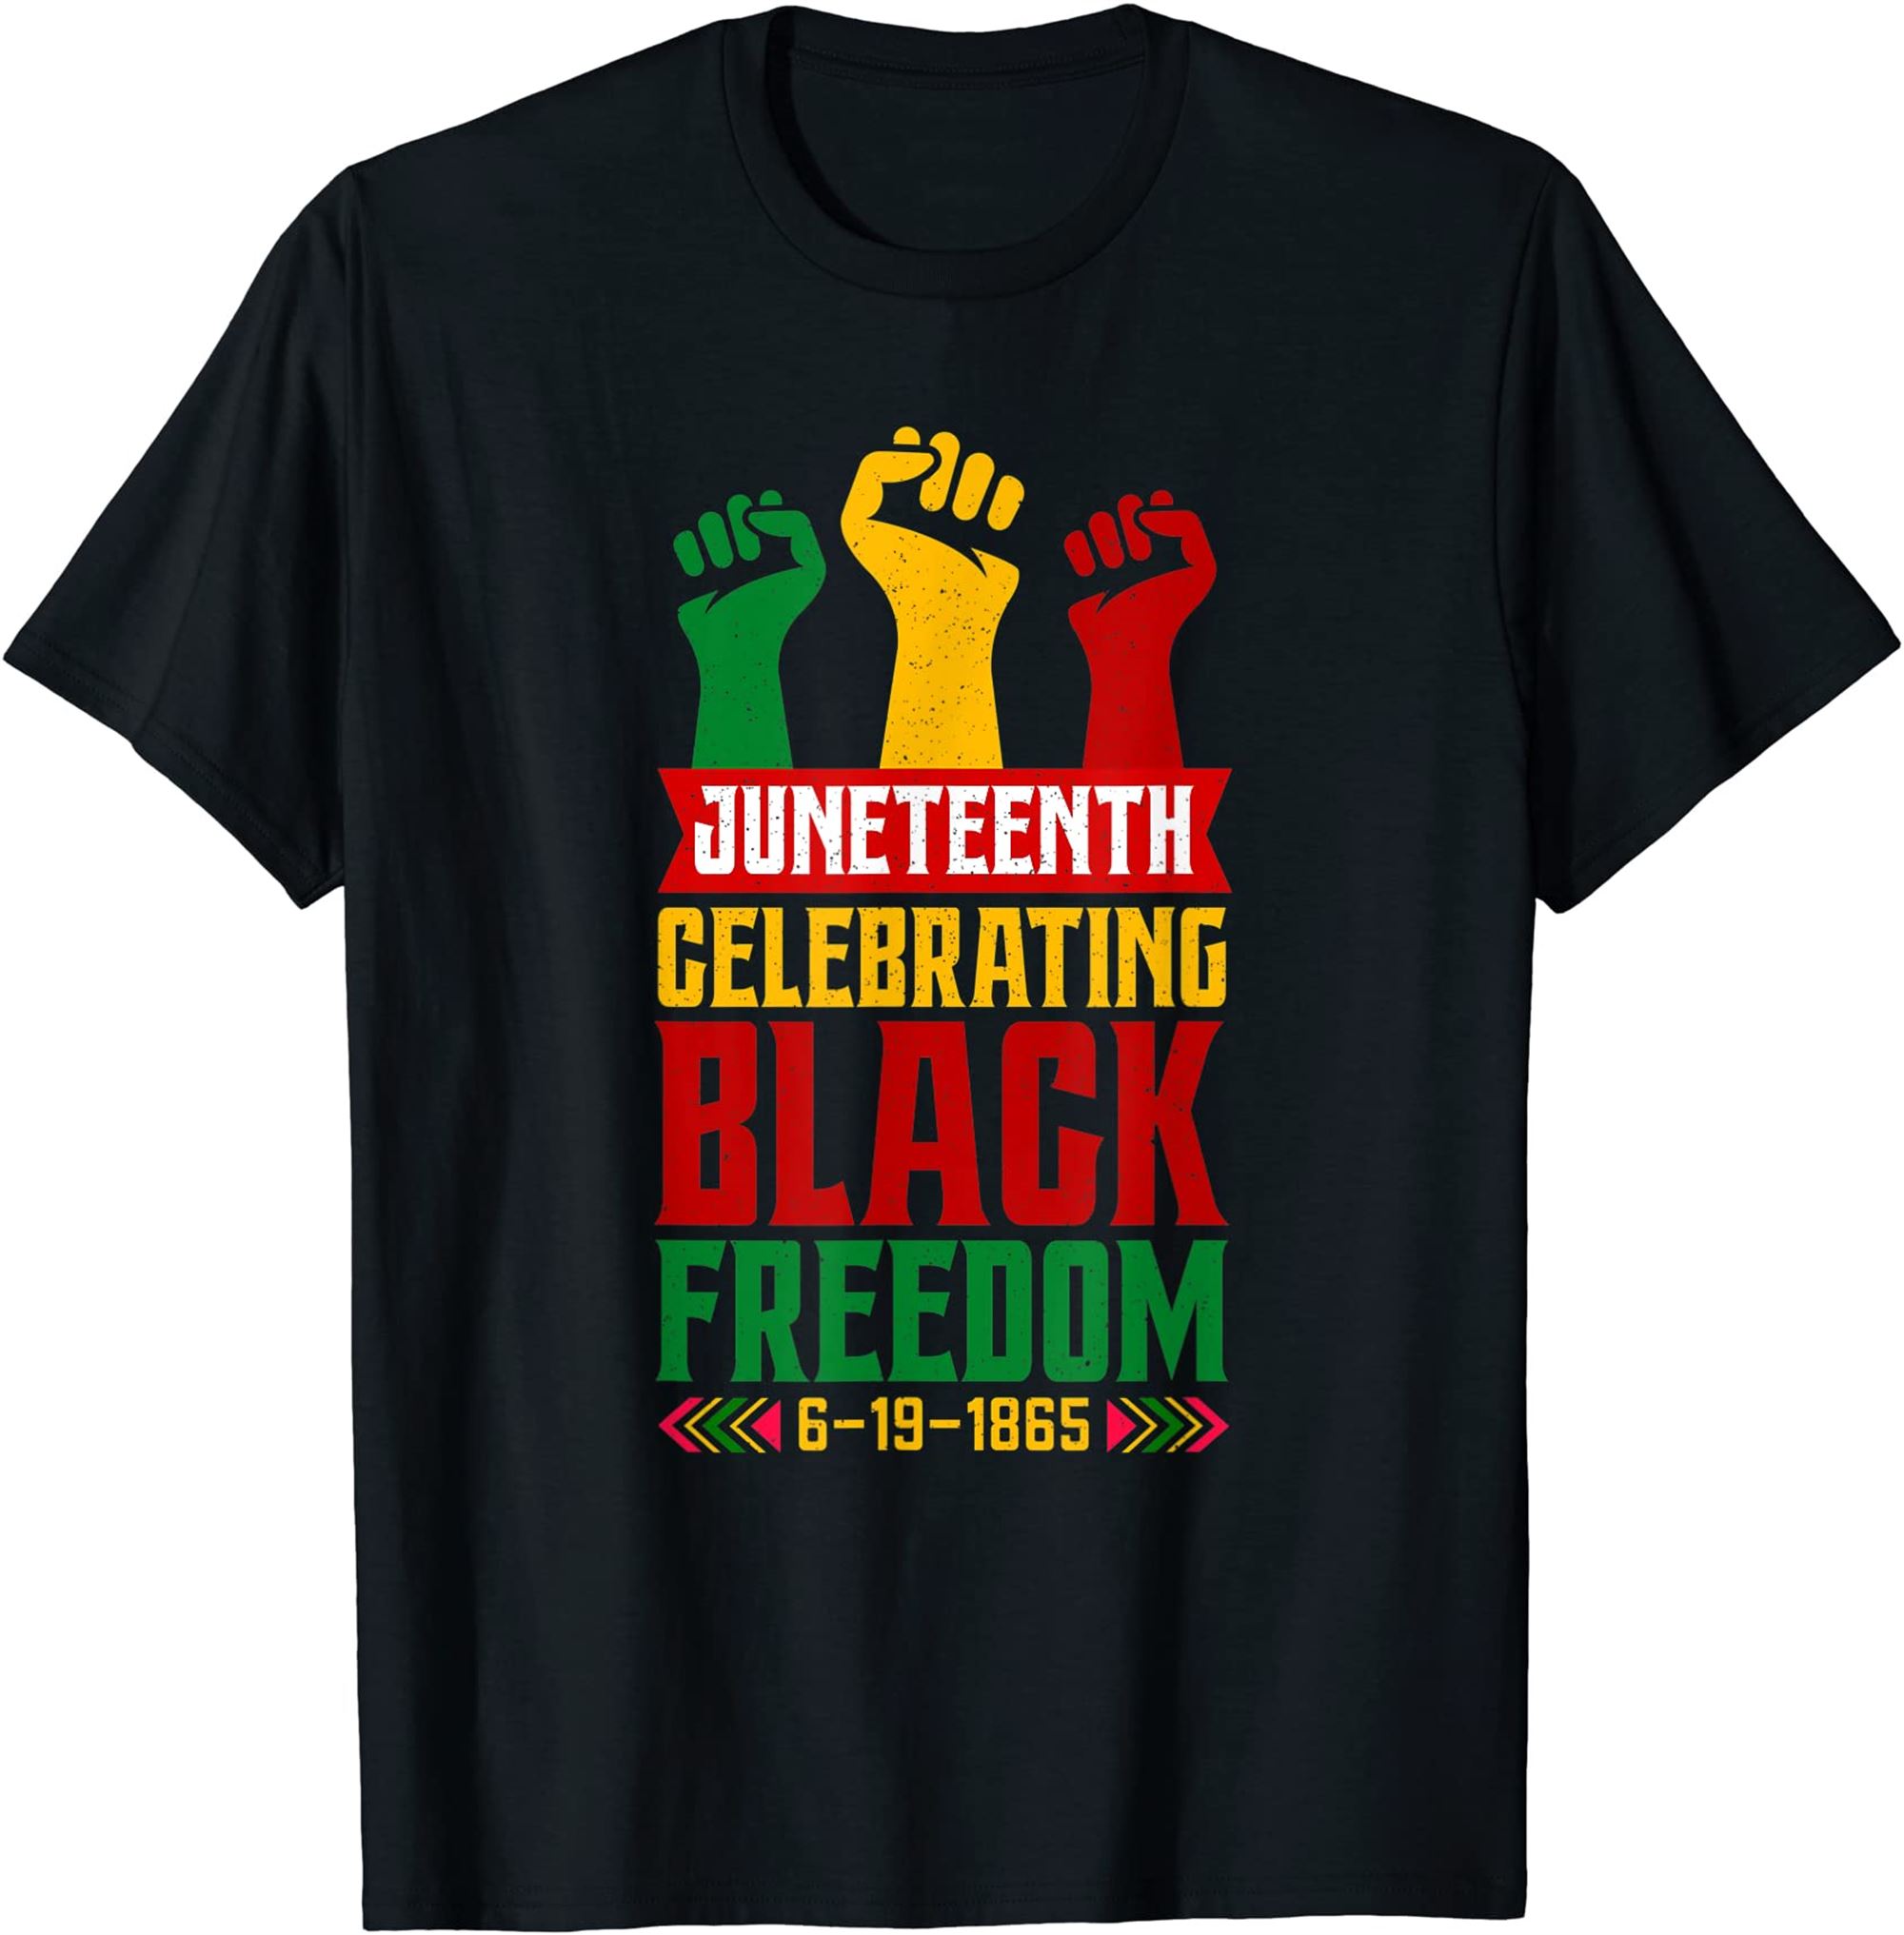 Happy Juneteenth 1865 Black Freedom Melanin Black Pride T-shirt Full Size Up To 5xl